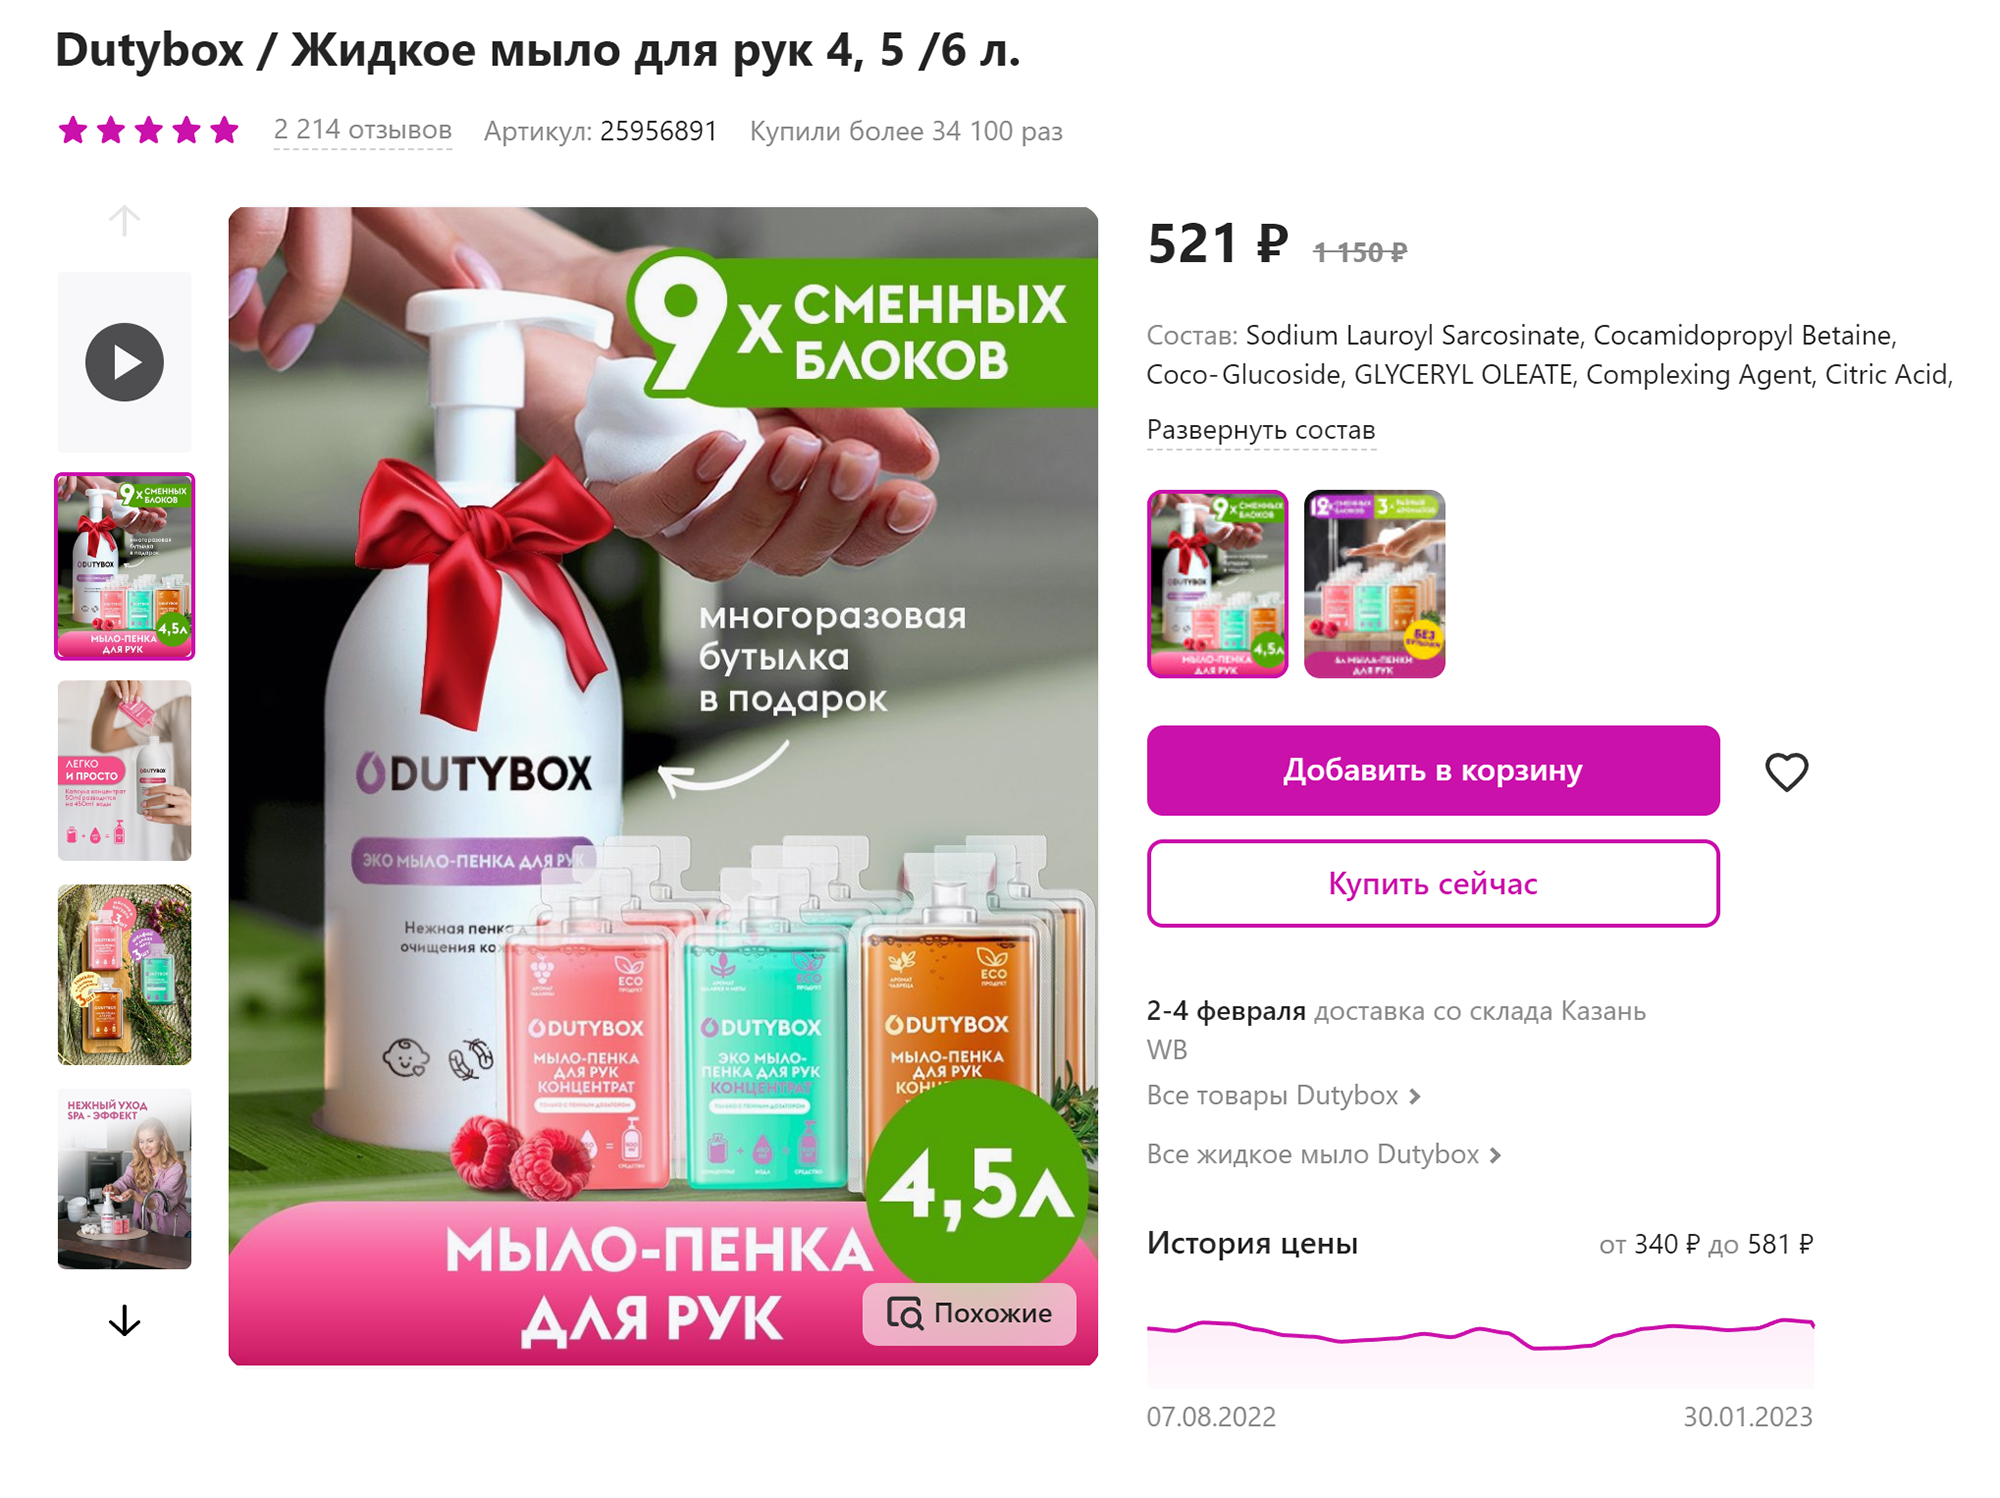 Мыло⁠-⁠пенка Dutybox на 4,5 л стоит 521 ₽. Тот же объем мыла Synergetic стоил бы 1170 ₽. Источник: wildberries.ru